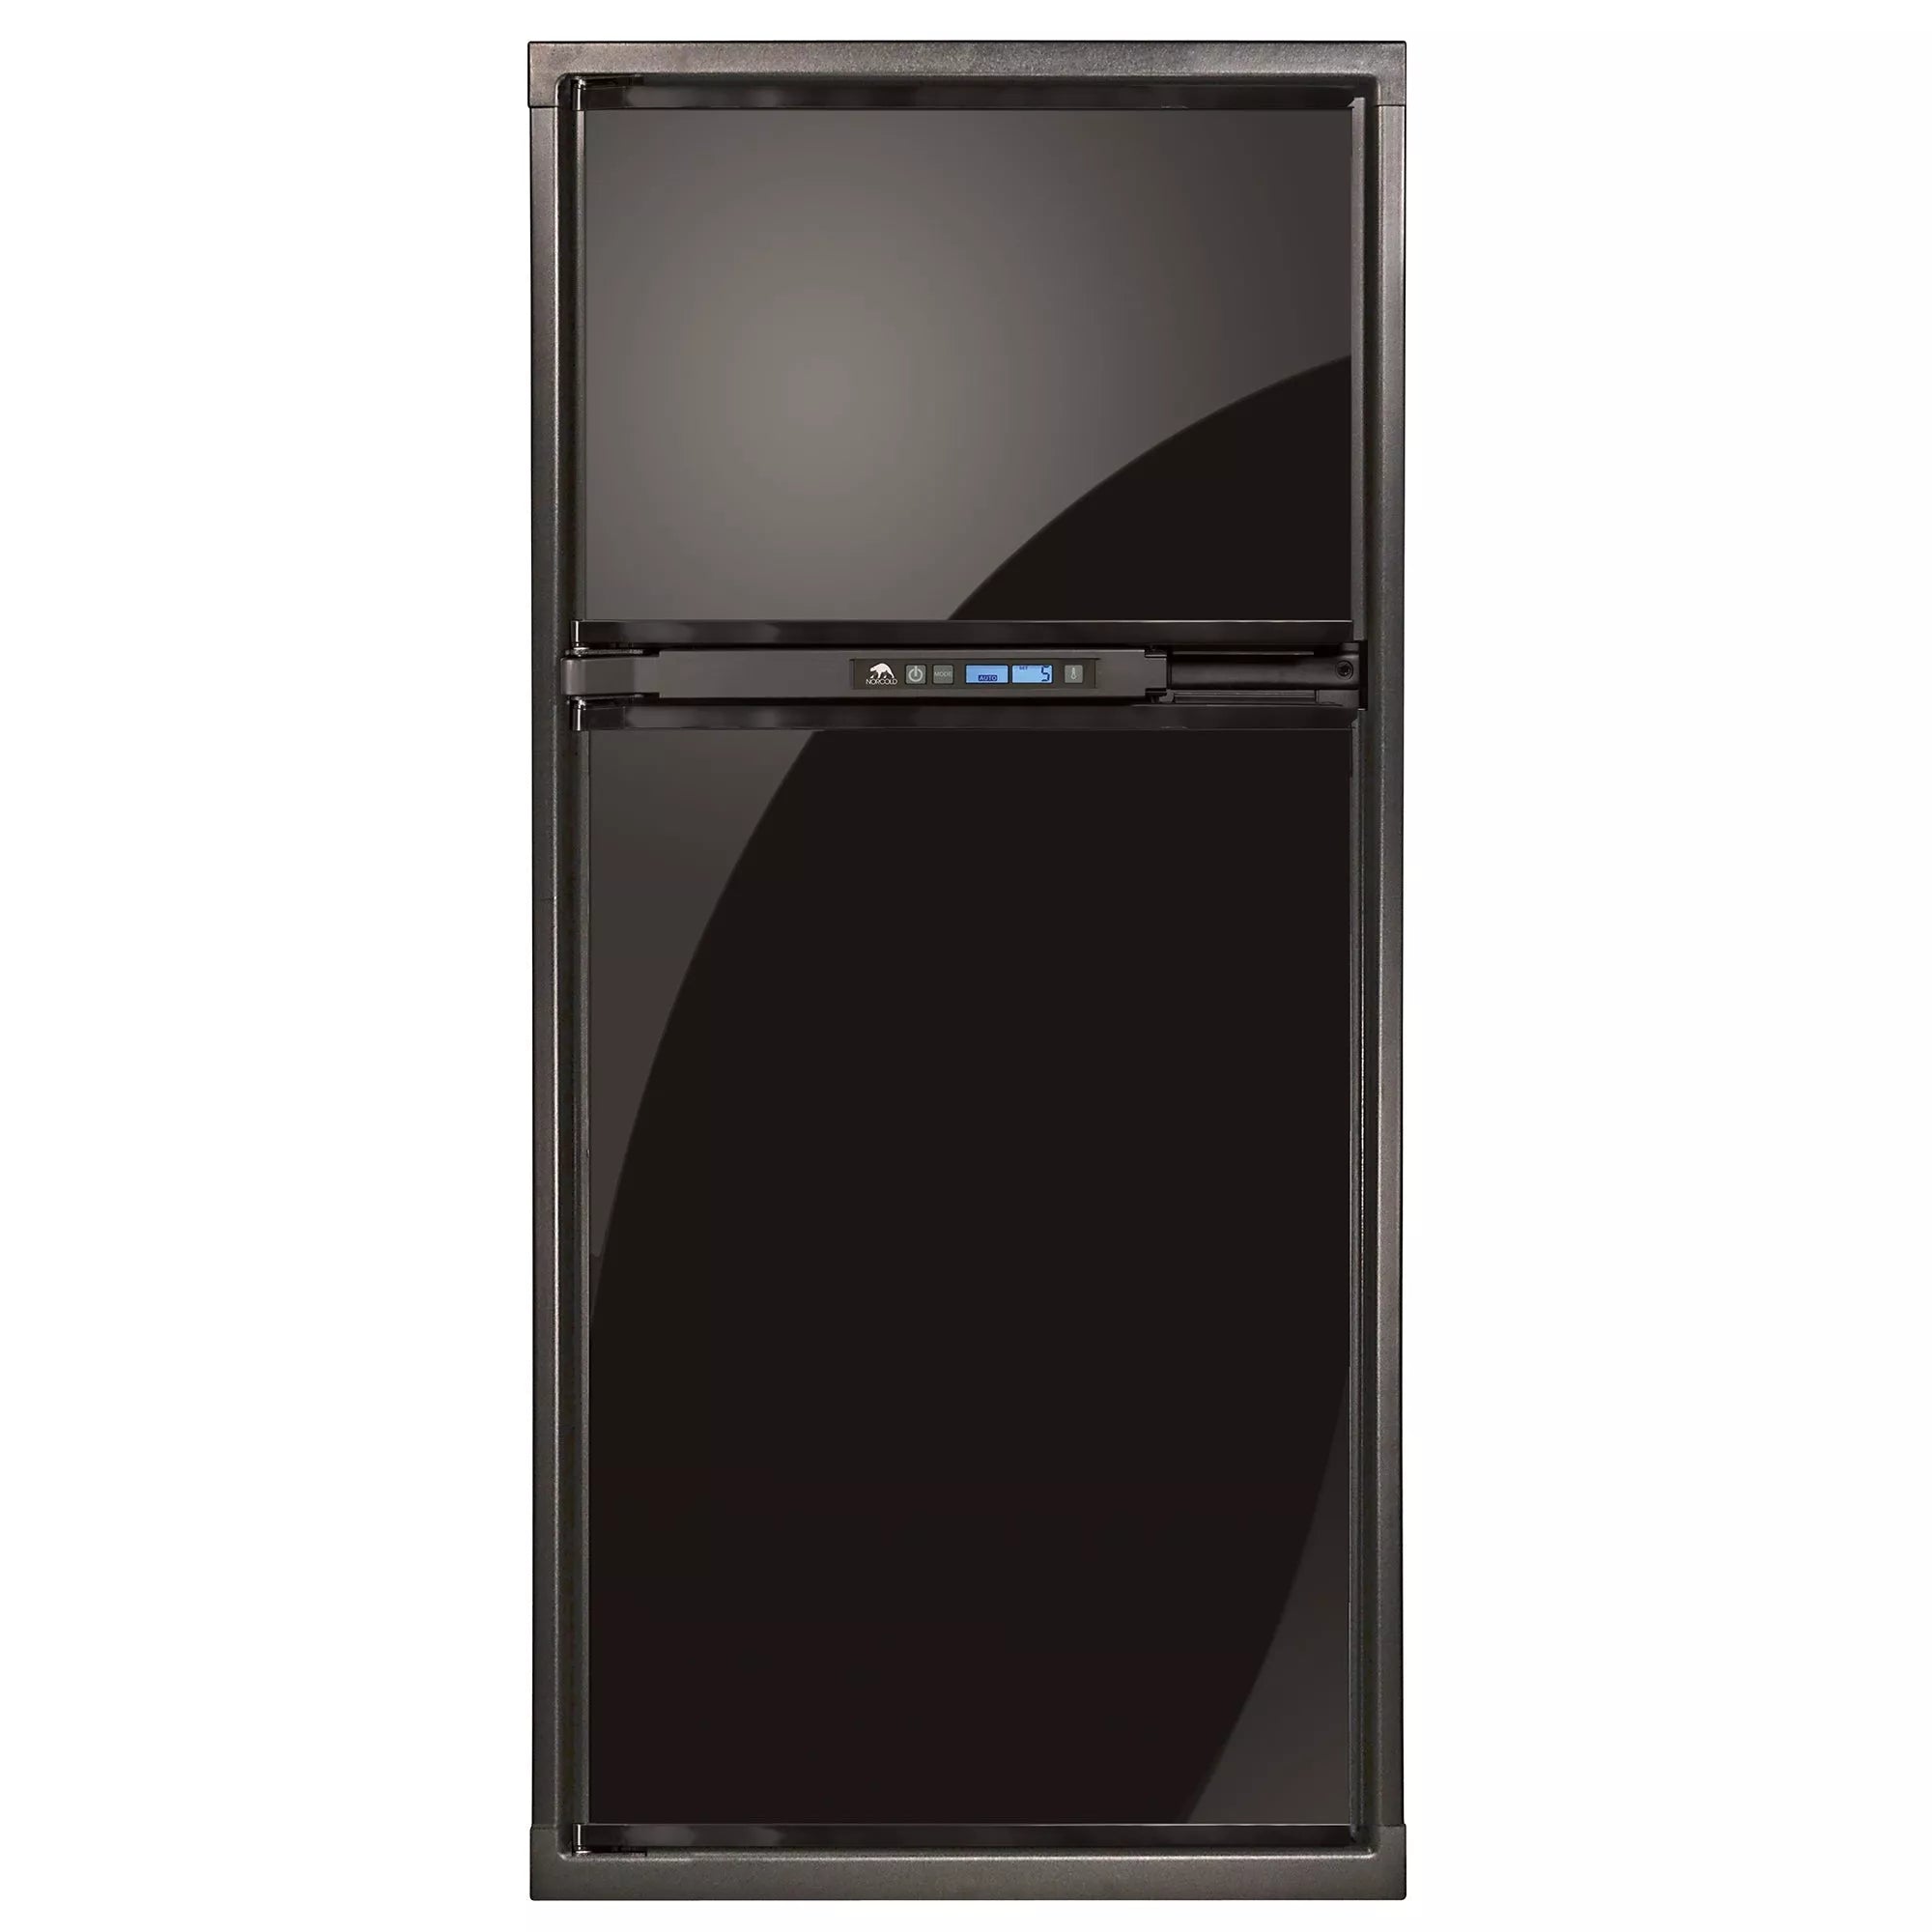 Norcold, Polar 2 - Way RV Refrigerator, NA7LX